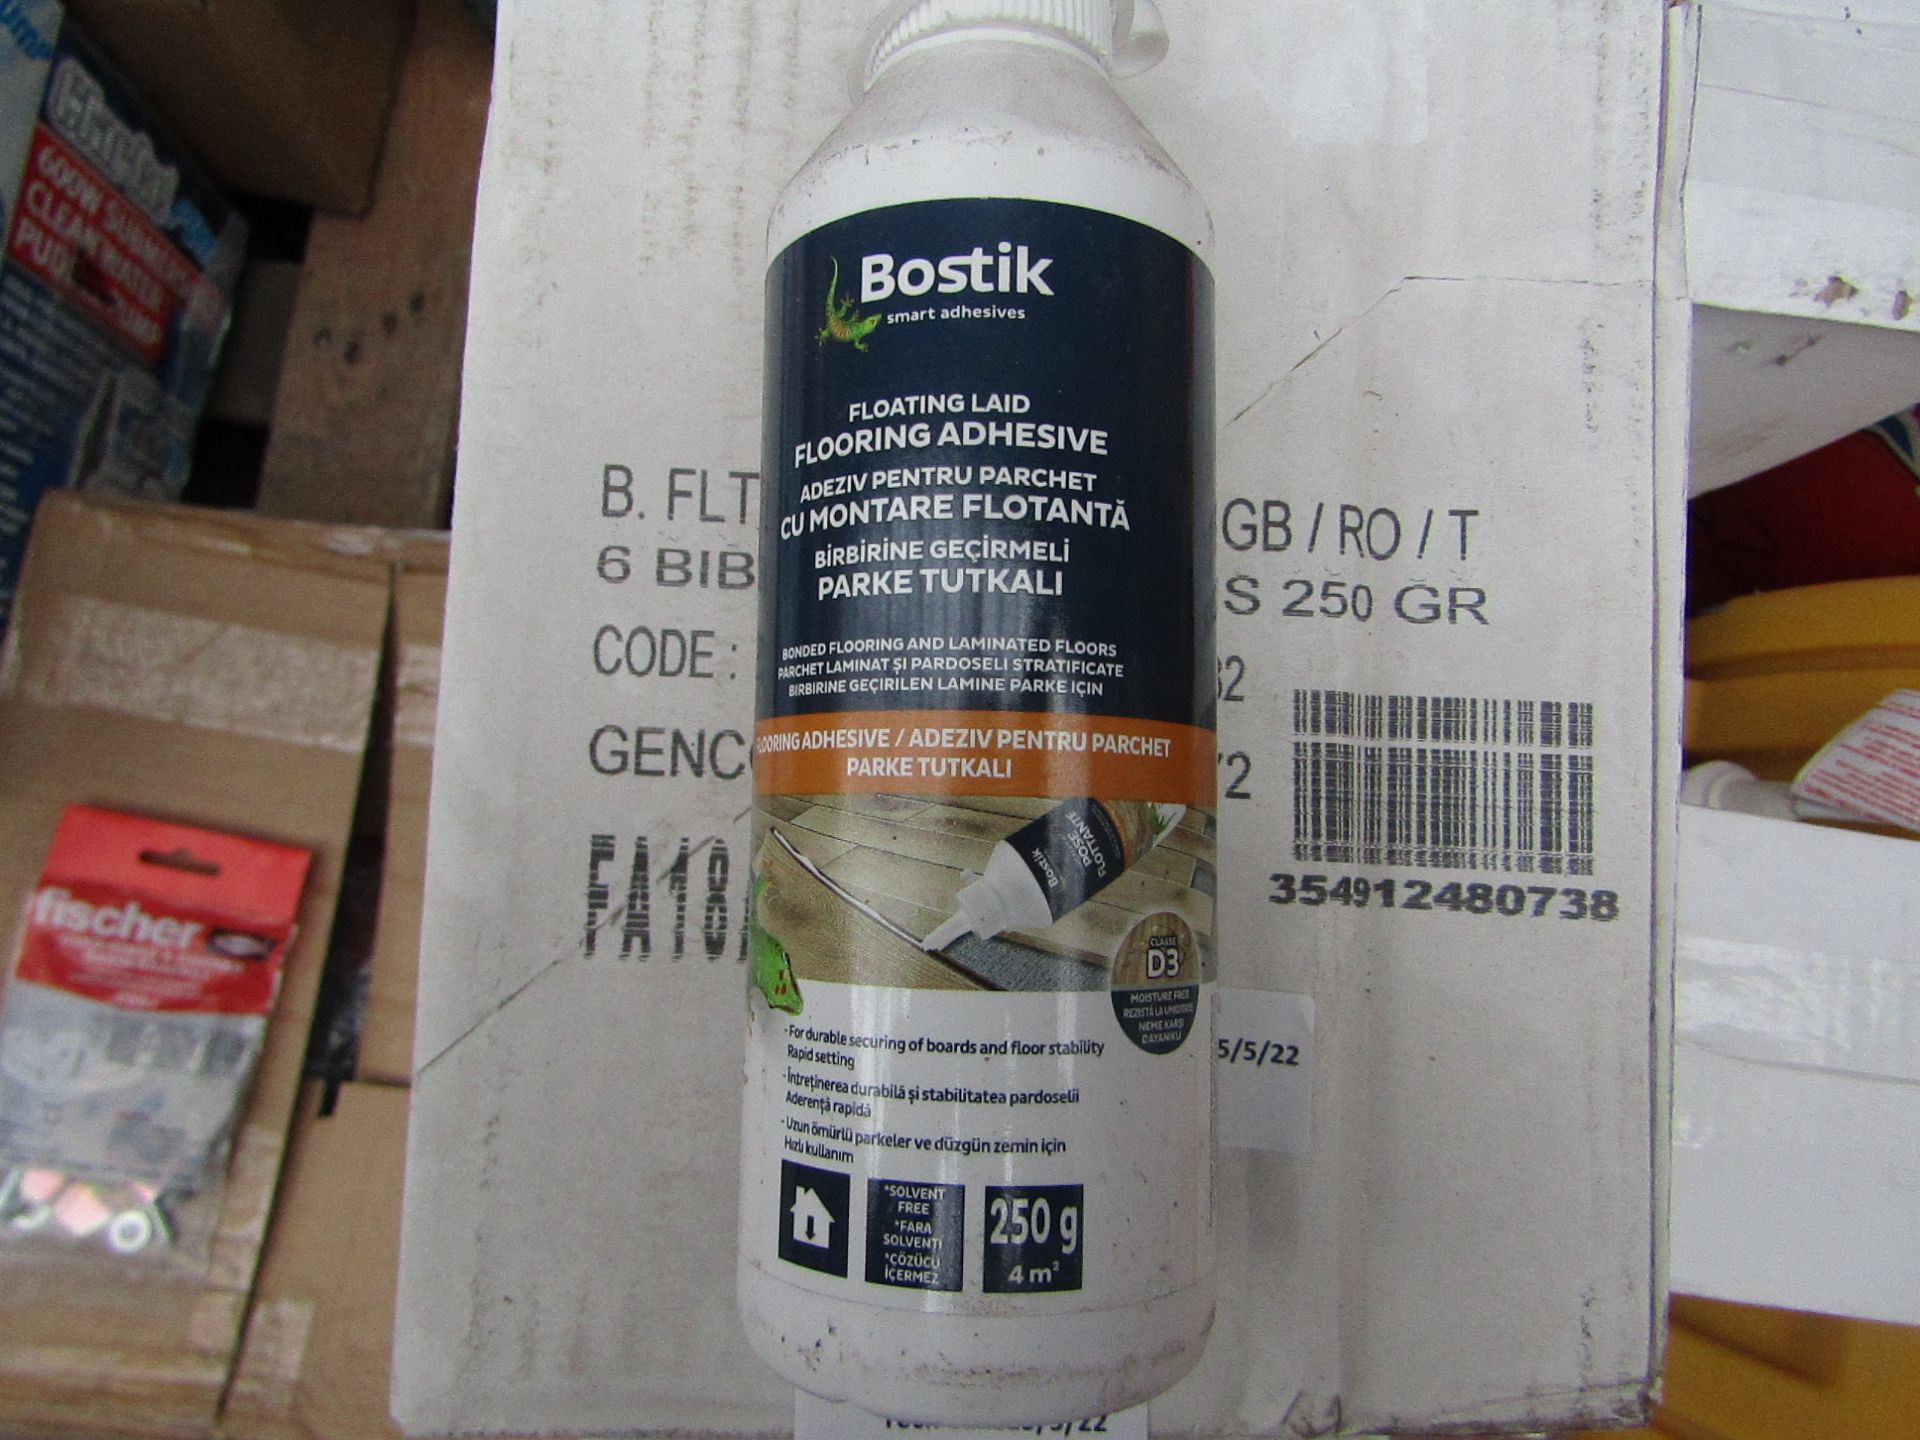 5x Boxes of 6x 250g bottles of Bostik Laminate floor adhesive - New & Sealed.